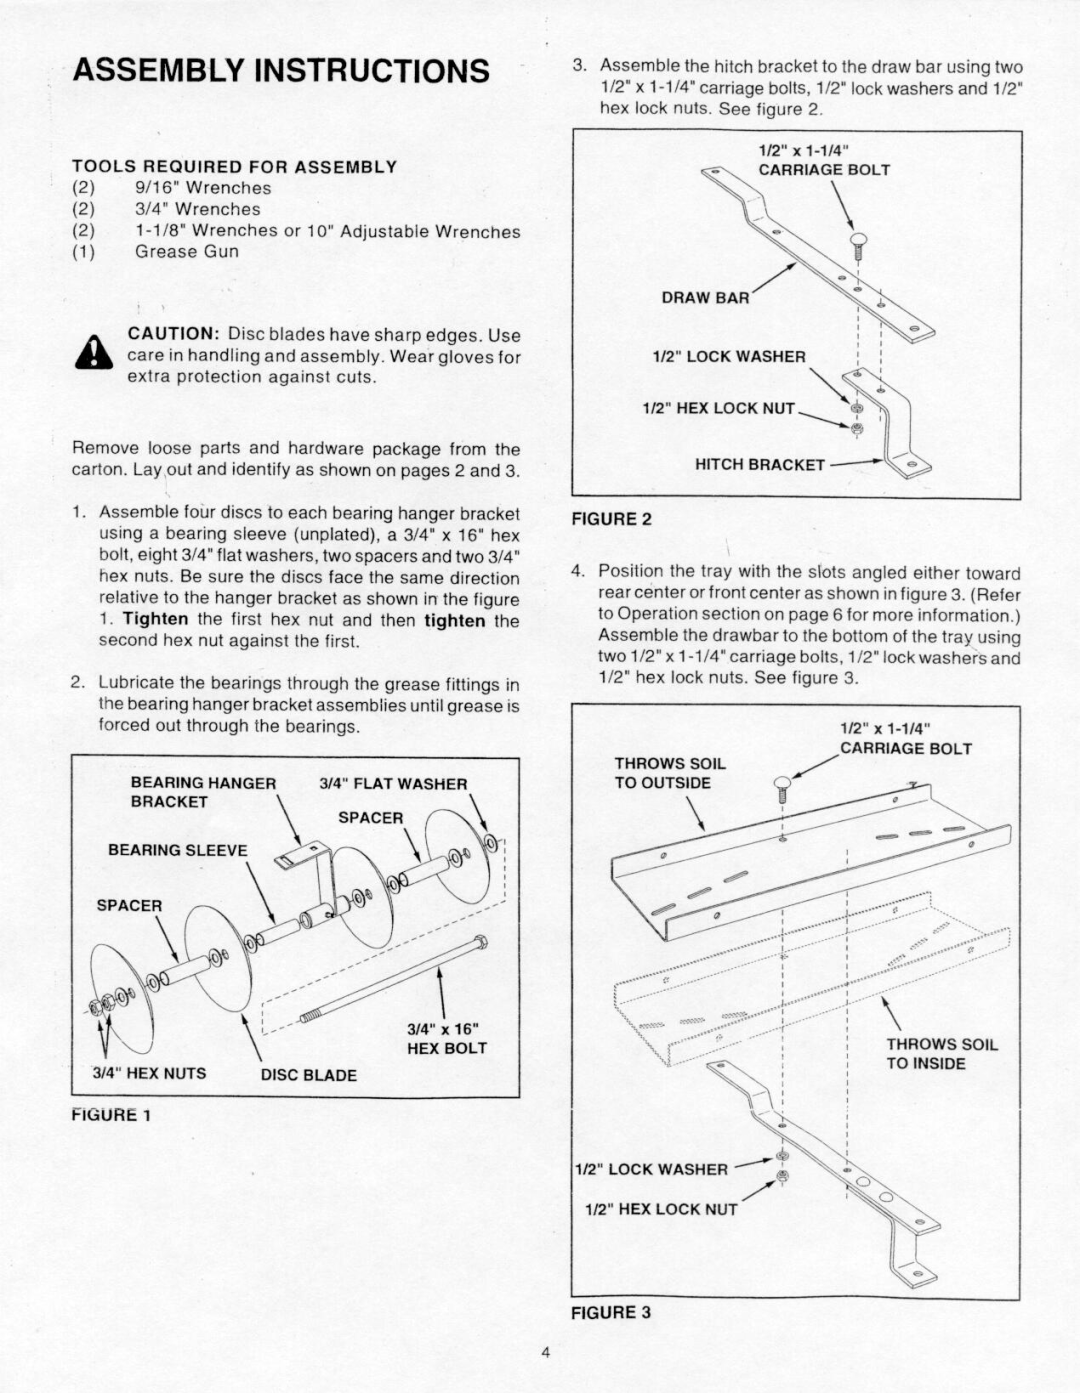 Agri-Fab 45-02661 manual 